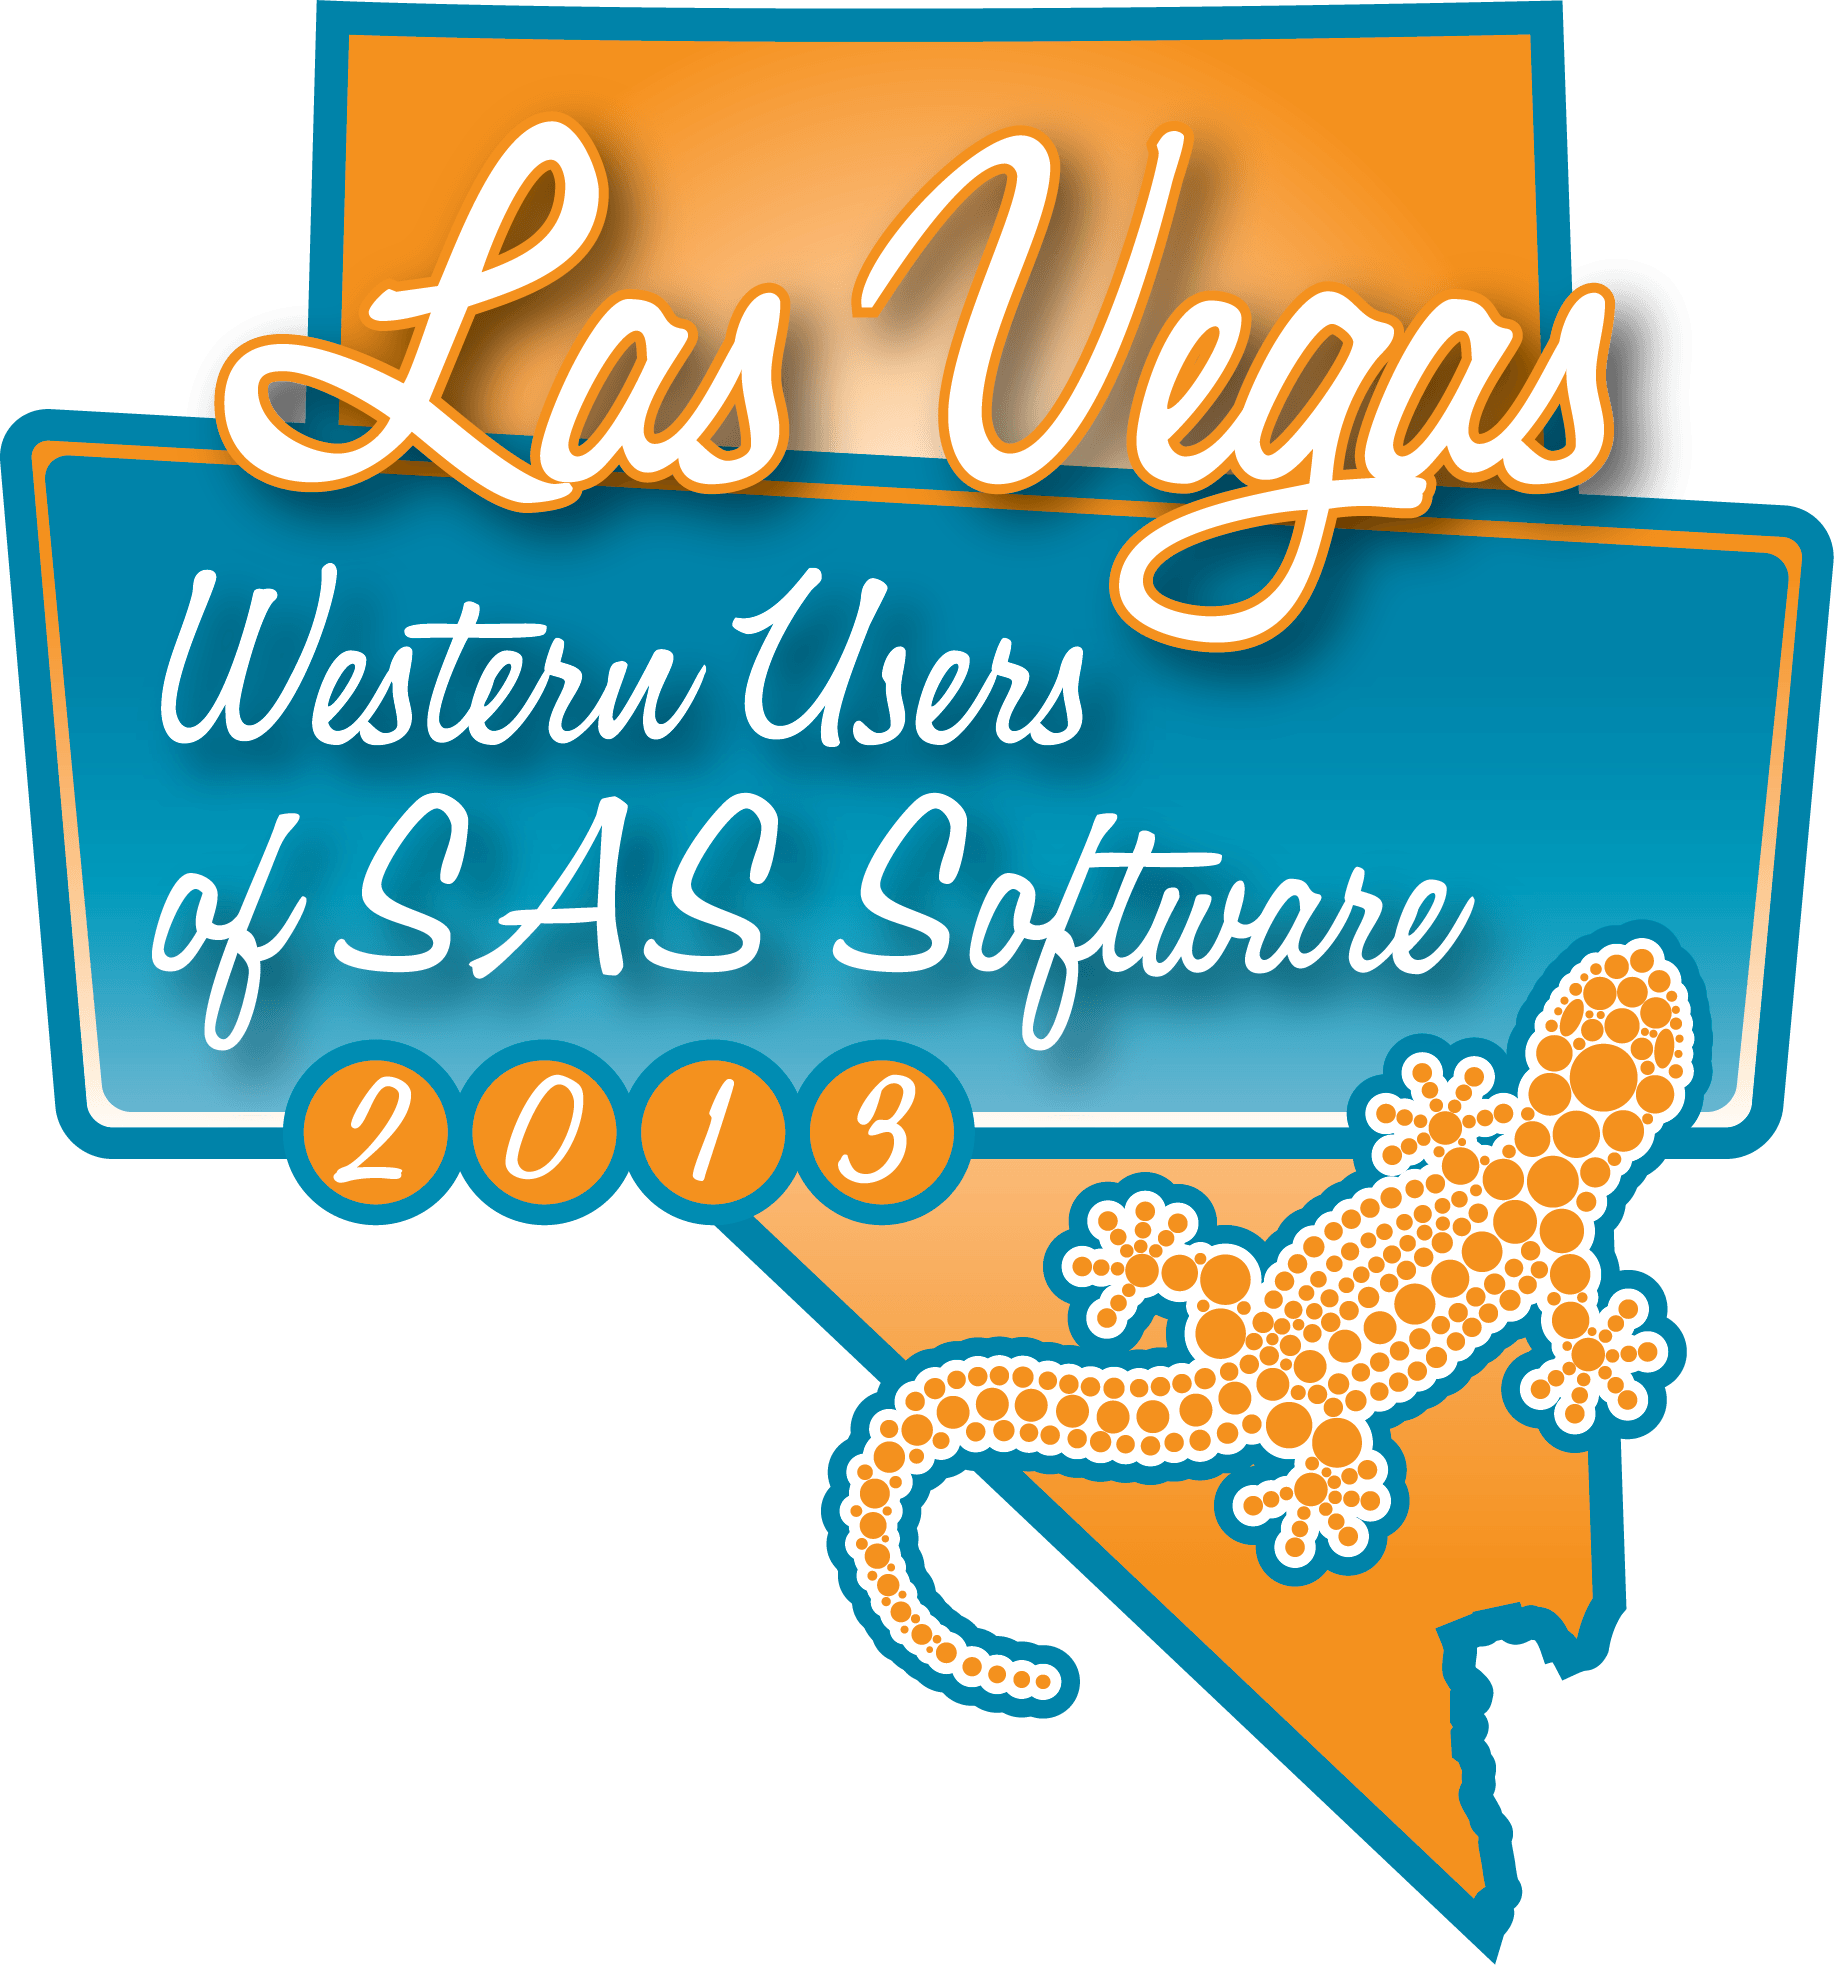 SAS Software Logo - Western Users of SAS Software